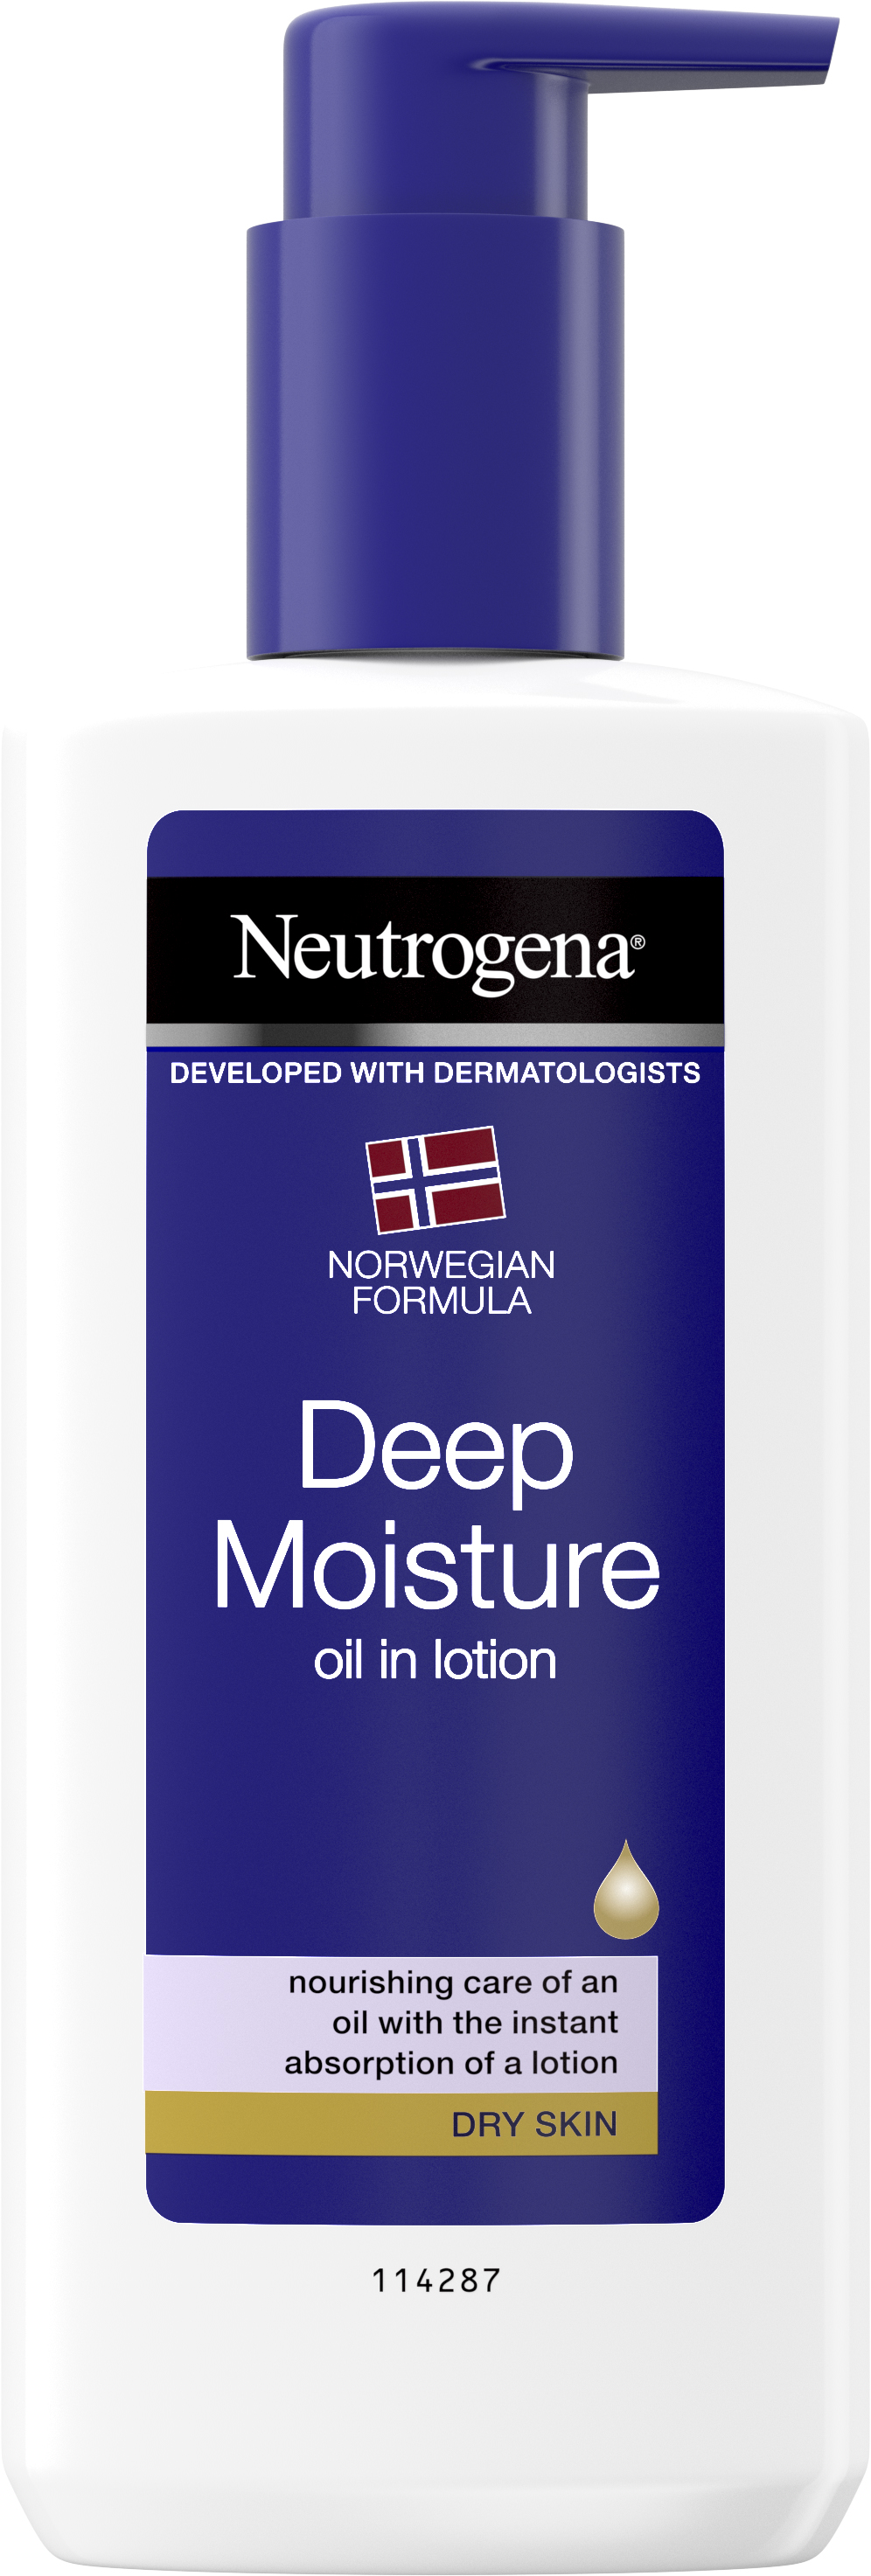 Neutrogena Norweigan Formula Deep Moisture Body Lotion Dry Skin